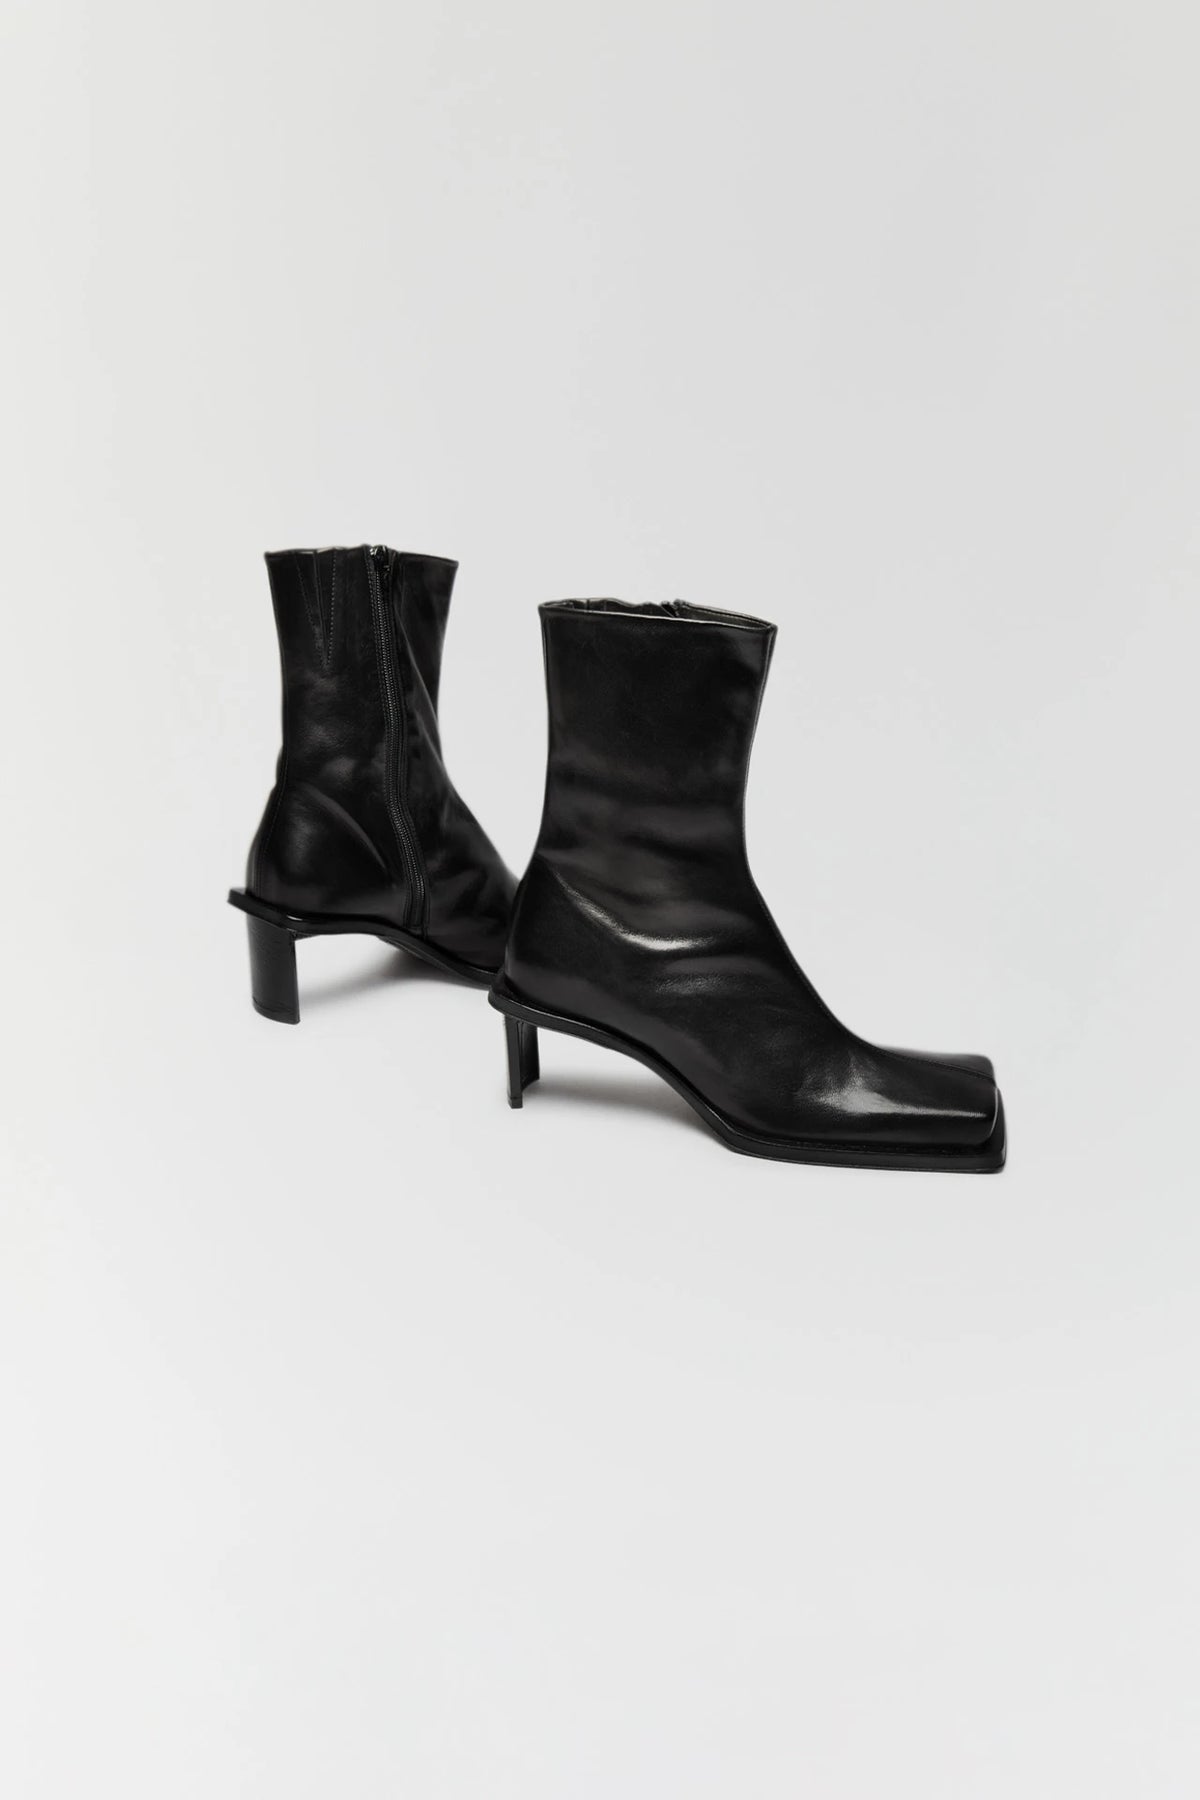 Miista Brenda Ankle Boots // Sonic Black